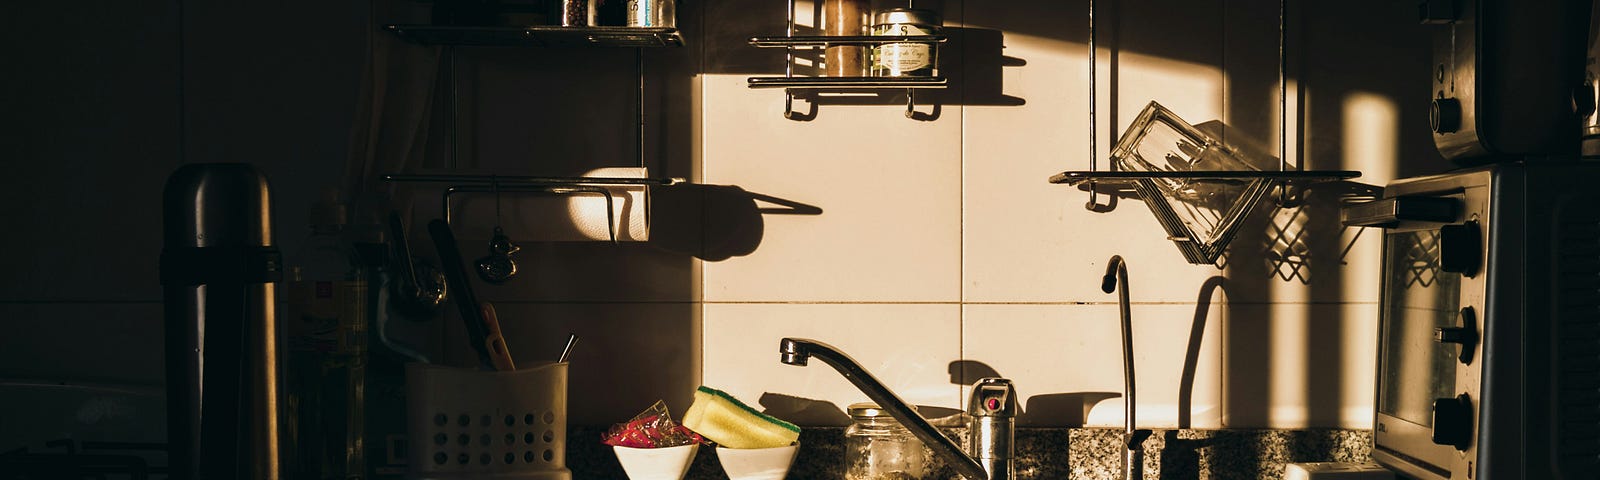 a light illuminates a kitchen counter and drawer